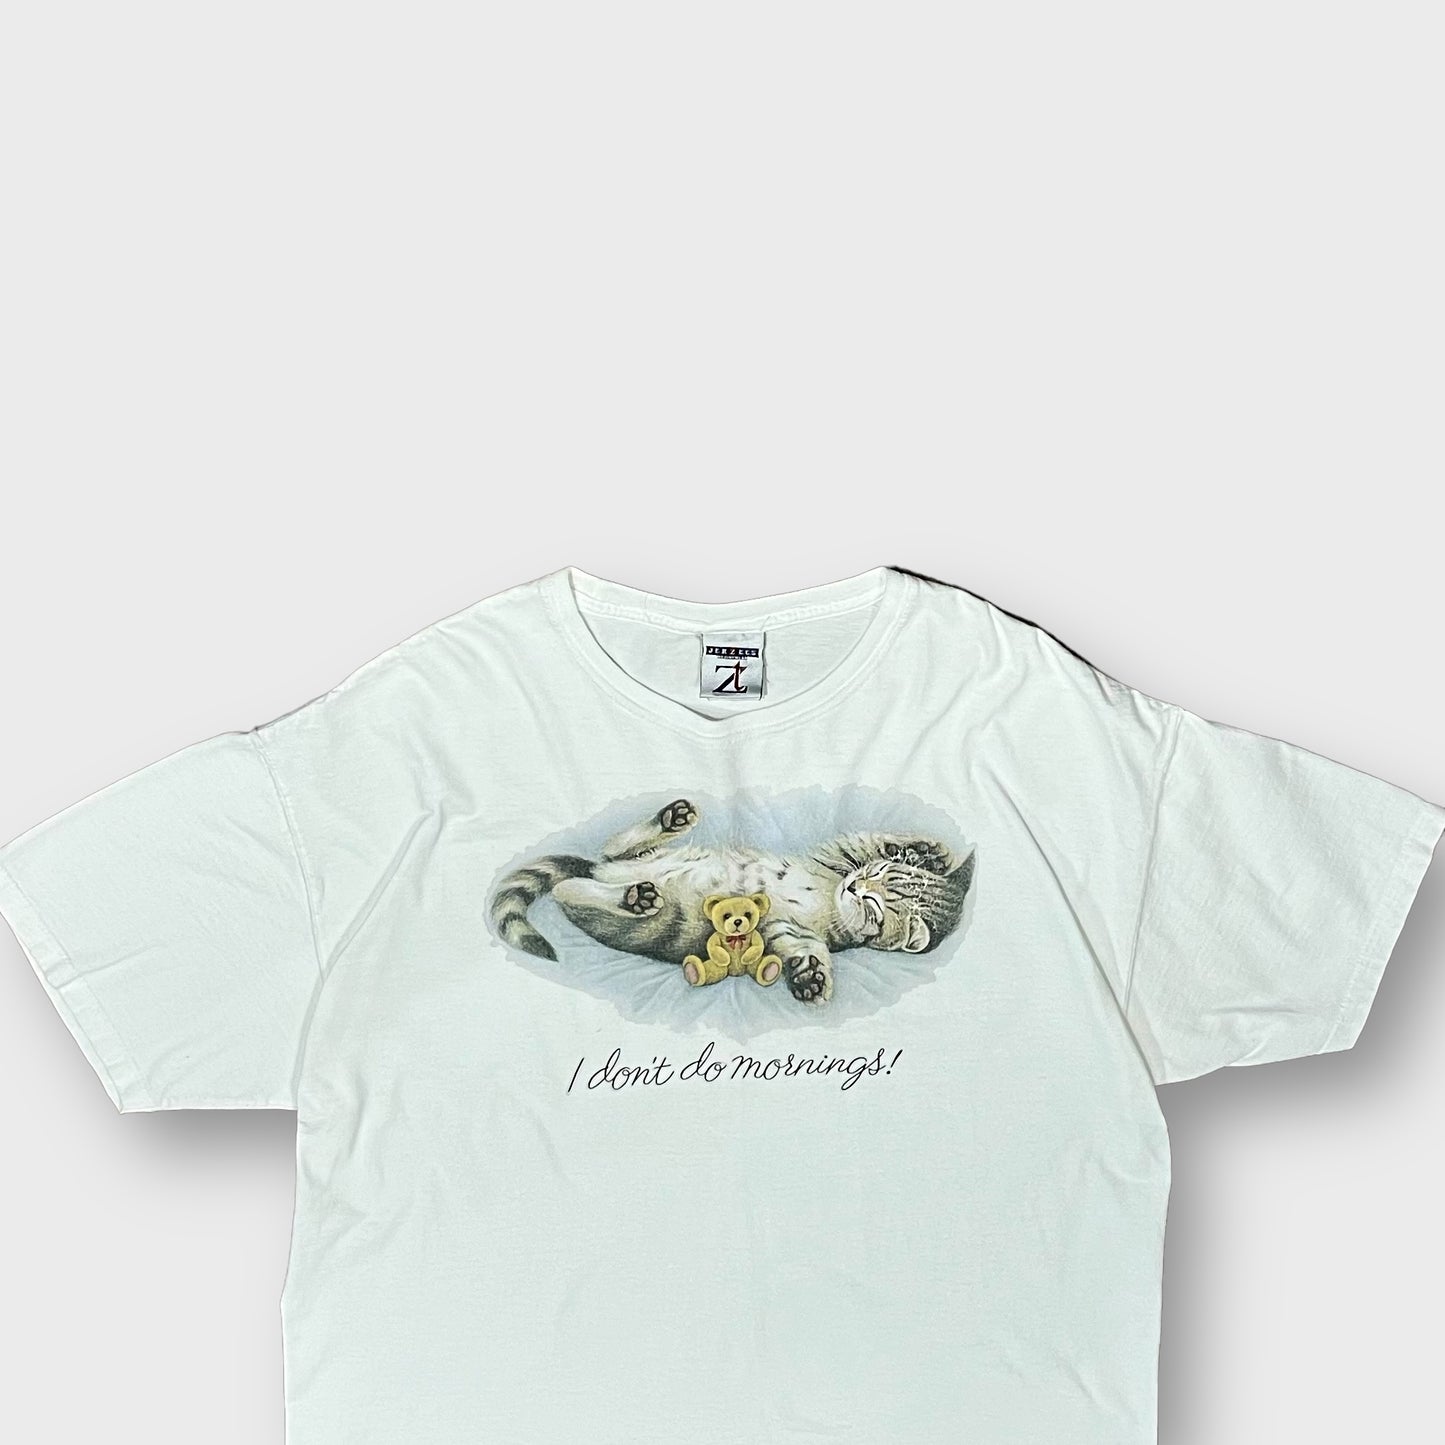 00’s animal t-shirt